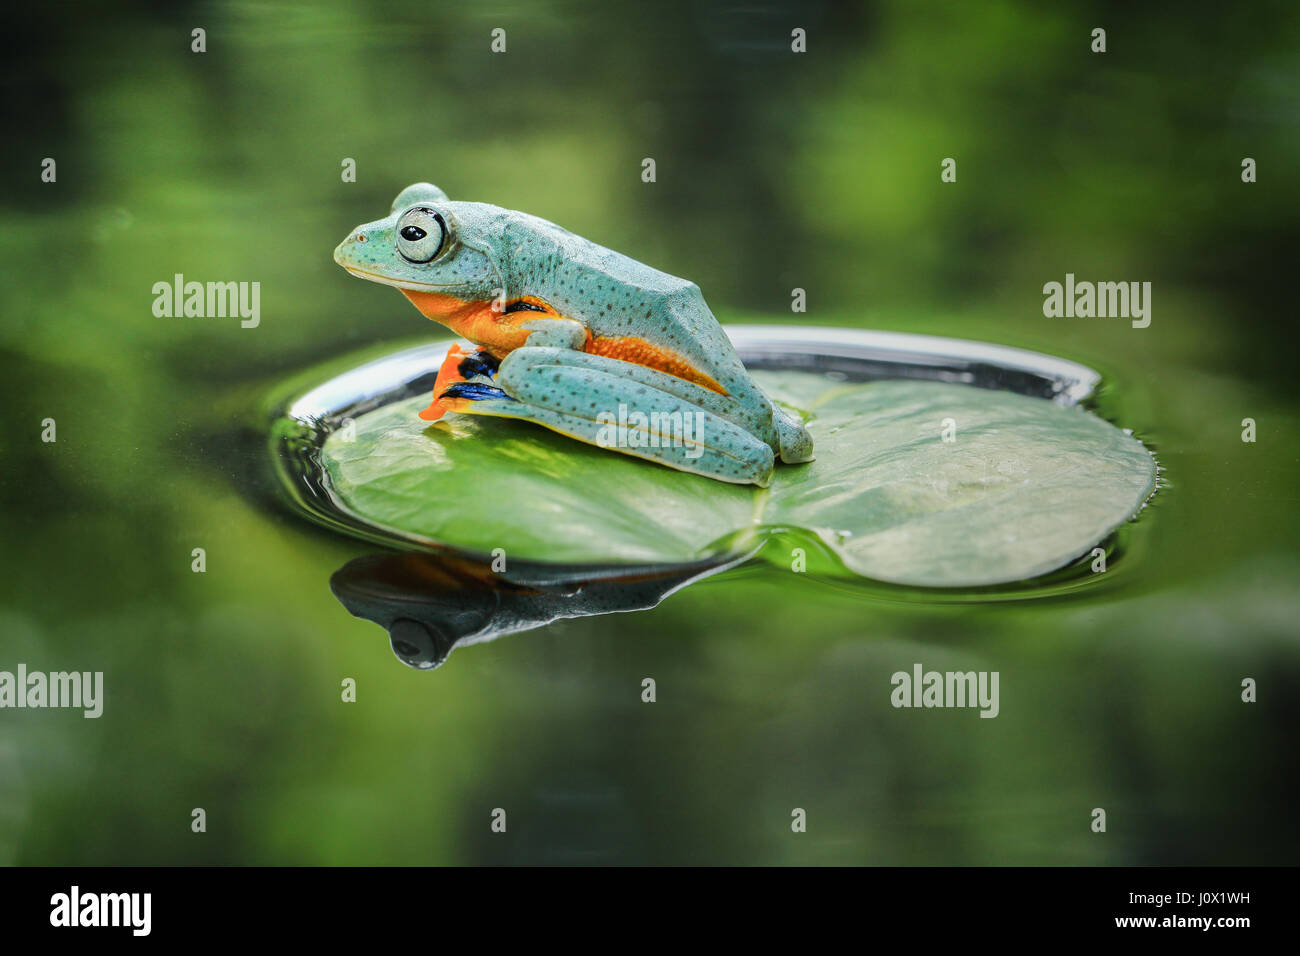 Frog sitting on lotus leaf, Indonesia Stock Photo